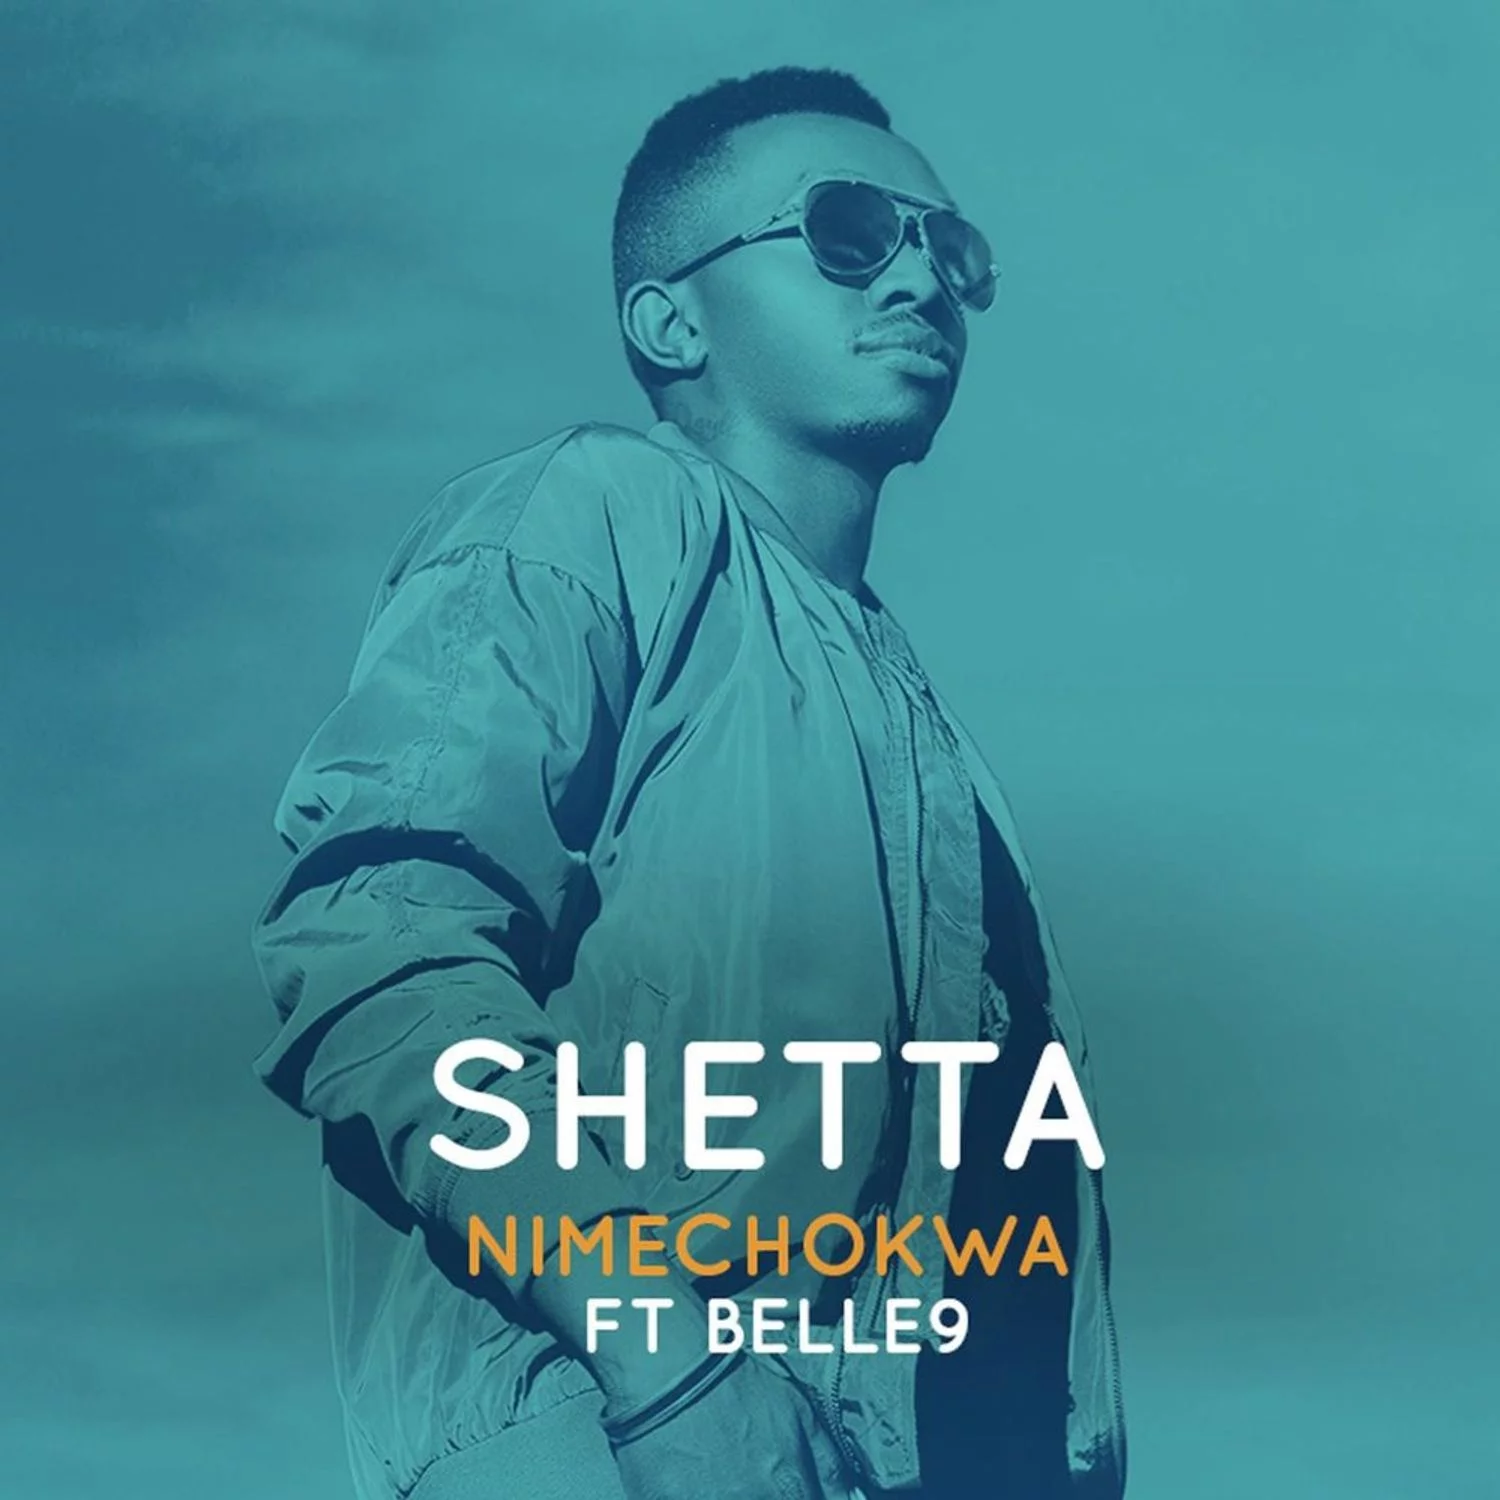 shetta ft belle 9 nimechokwa